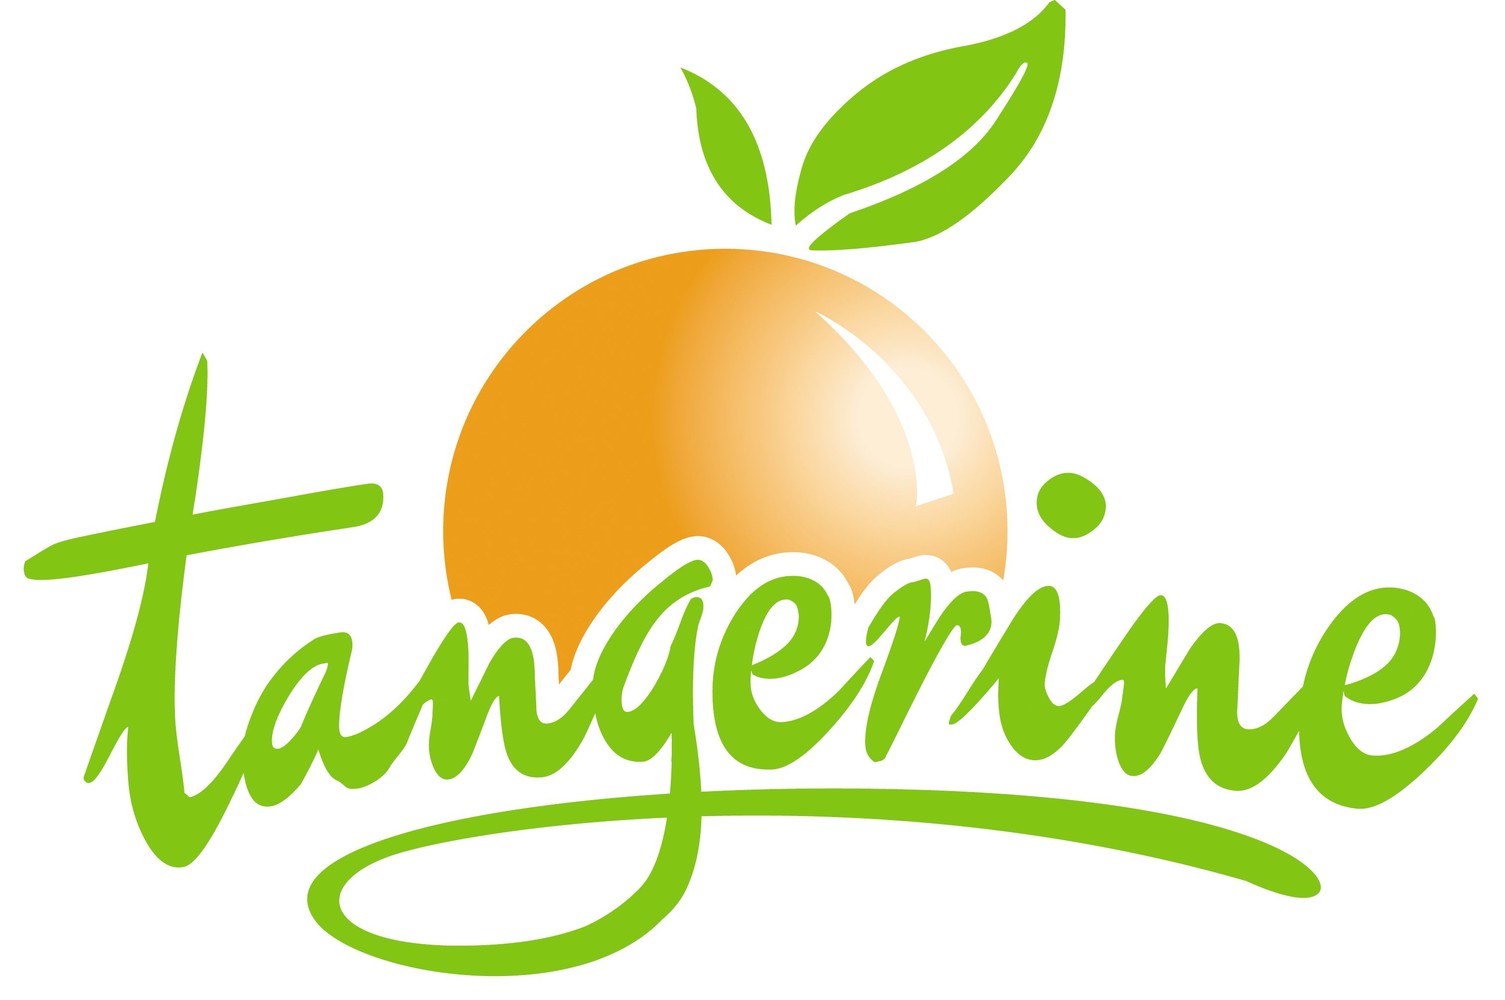 Tangerine confectionary